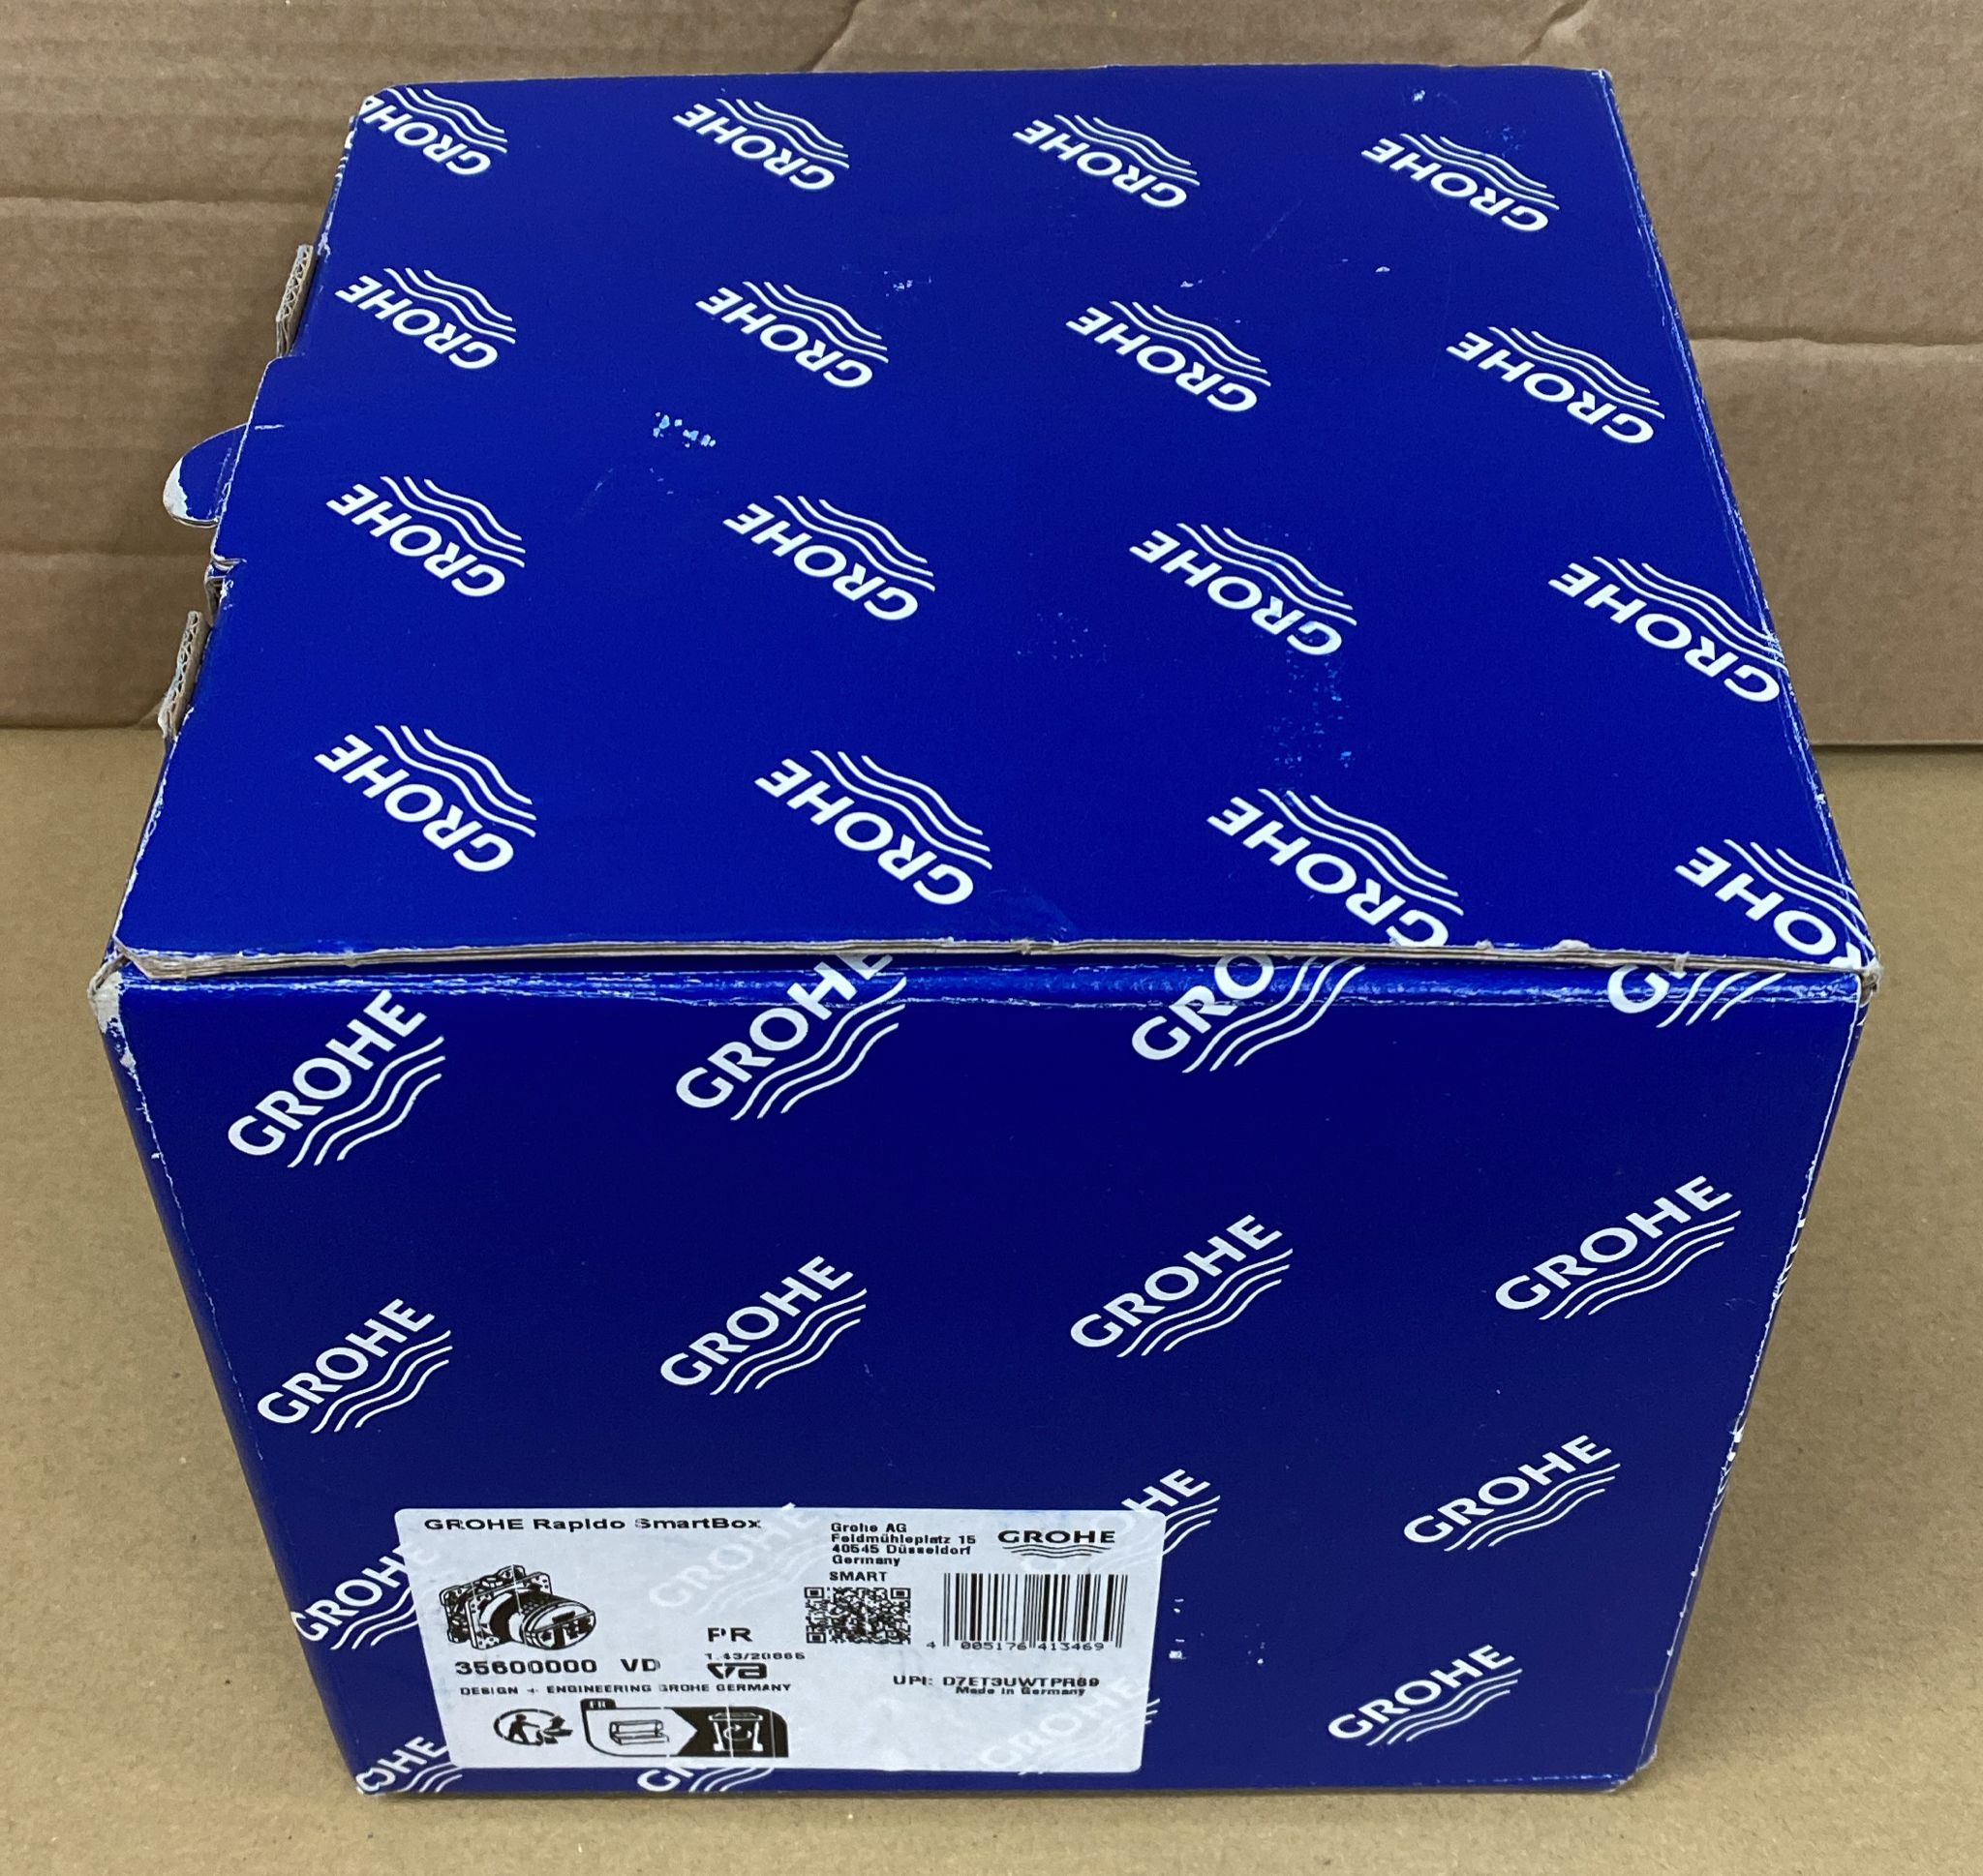 Grohe Rapido Smartbox Universal Rough-In Box 1/2 Inch -3469